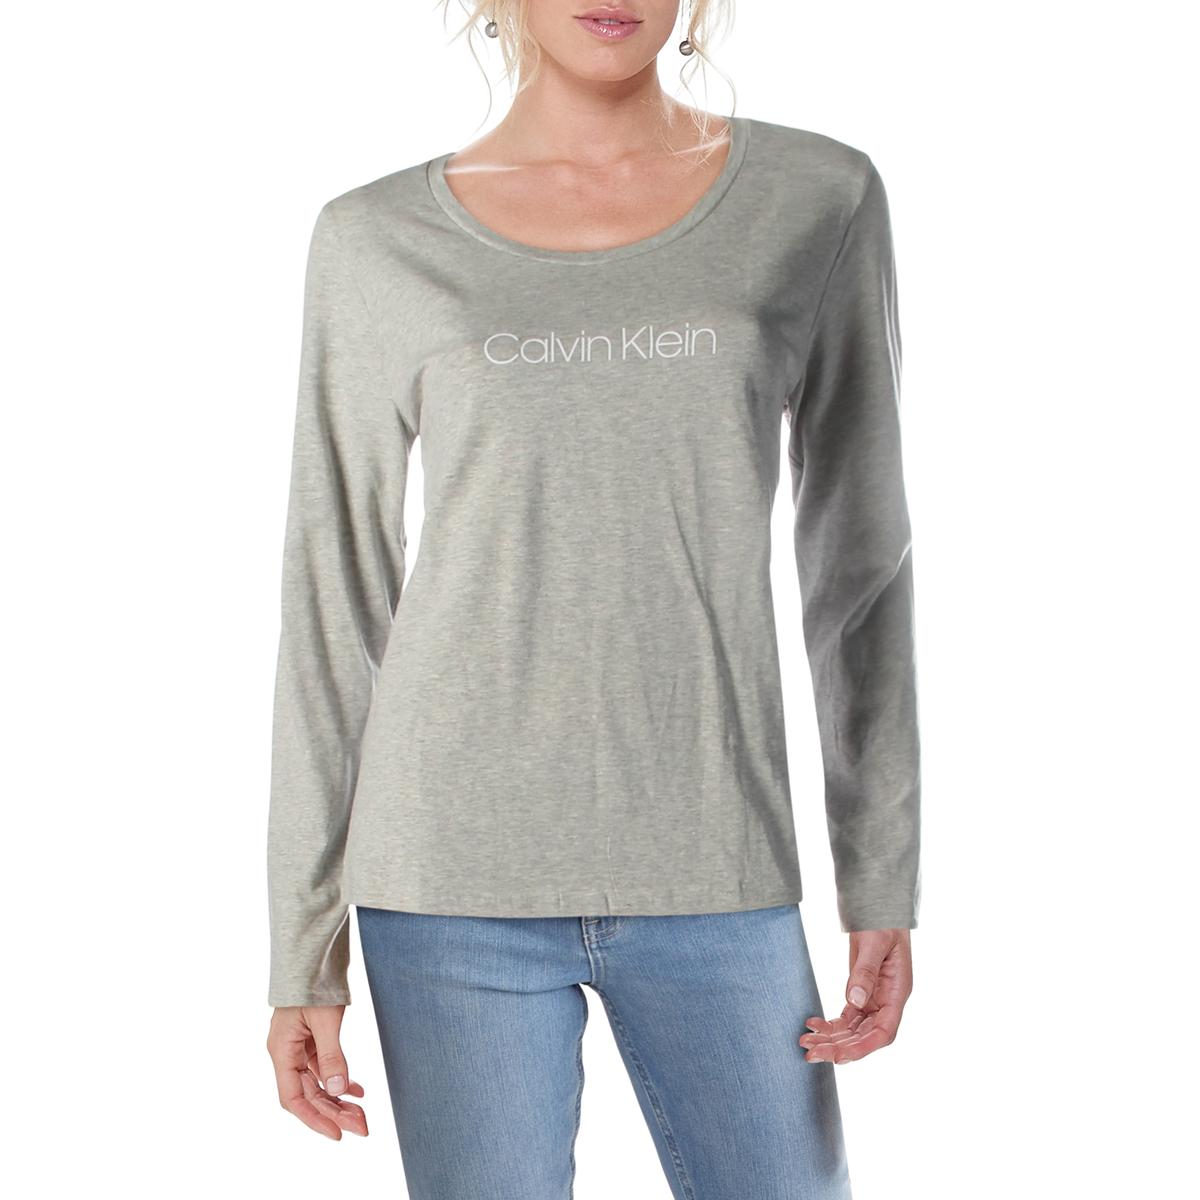 Calvin Klein Sleepwear Womens Gray Graphic Pullover Top Shirt L BHFO ...